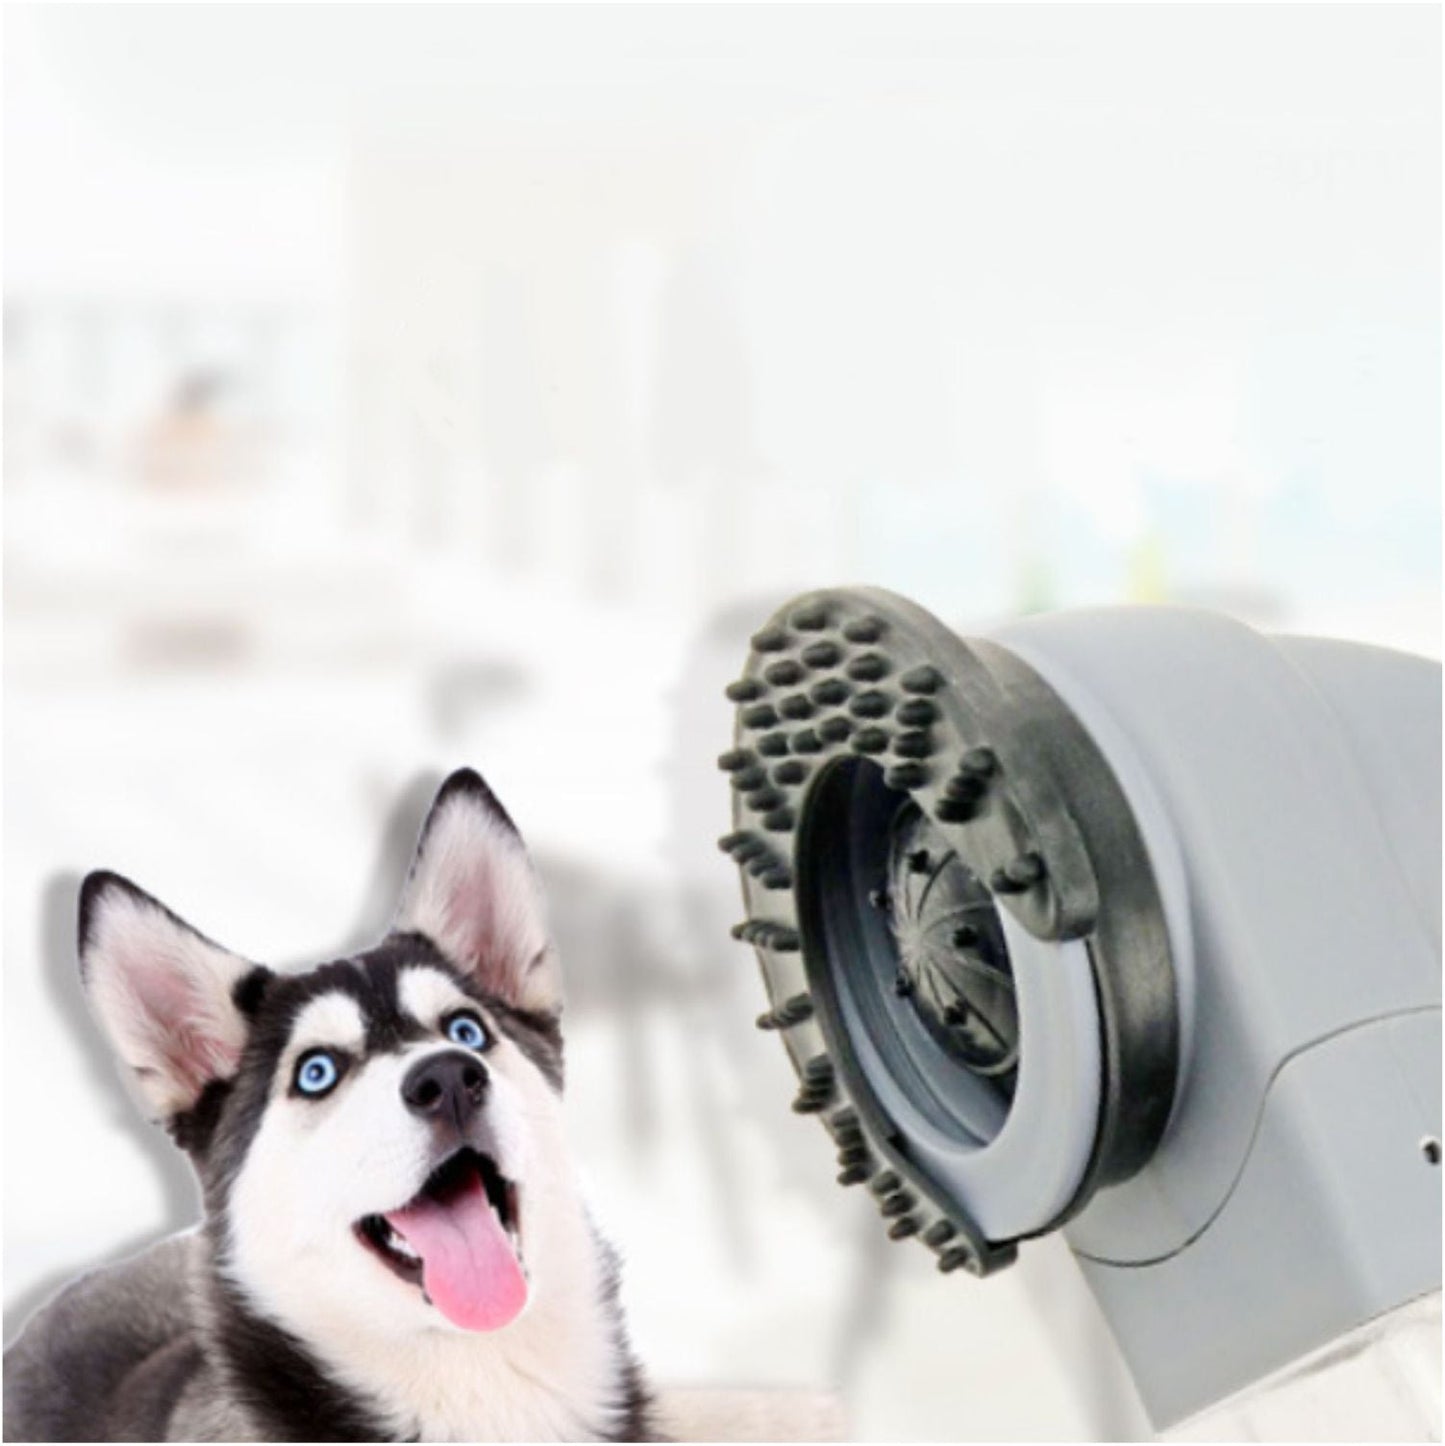 Portable Cordless Handheld Pet Dog Cat Fur Grooming Vacuum Cleaner